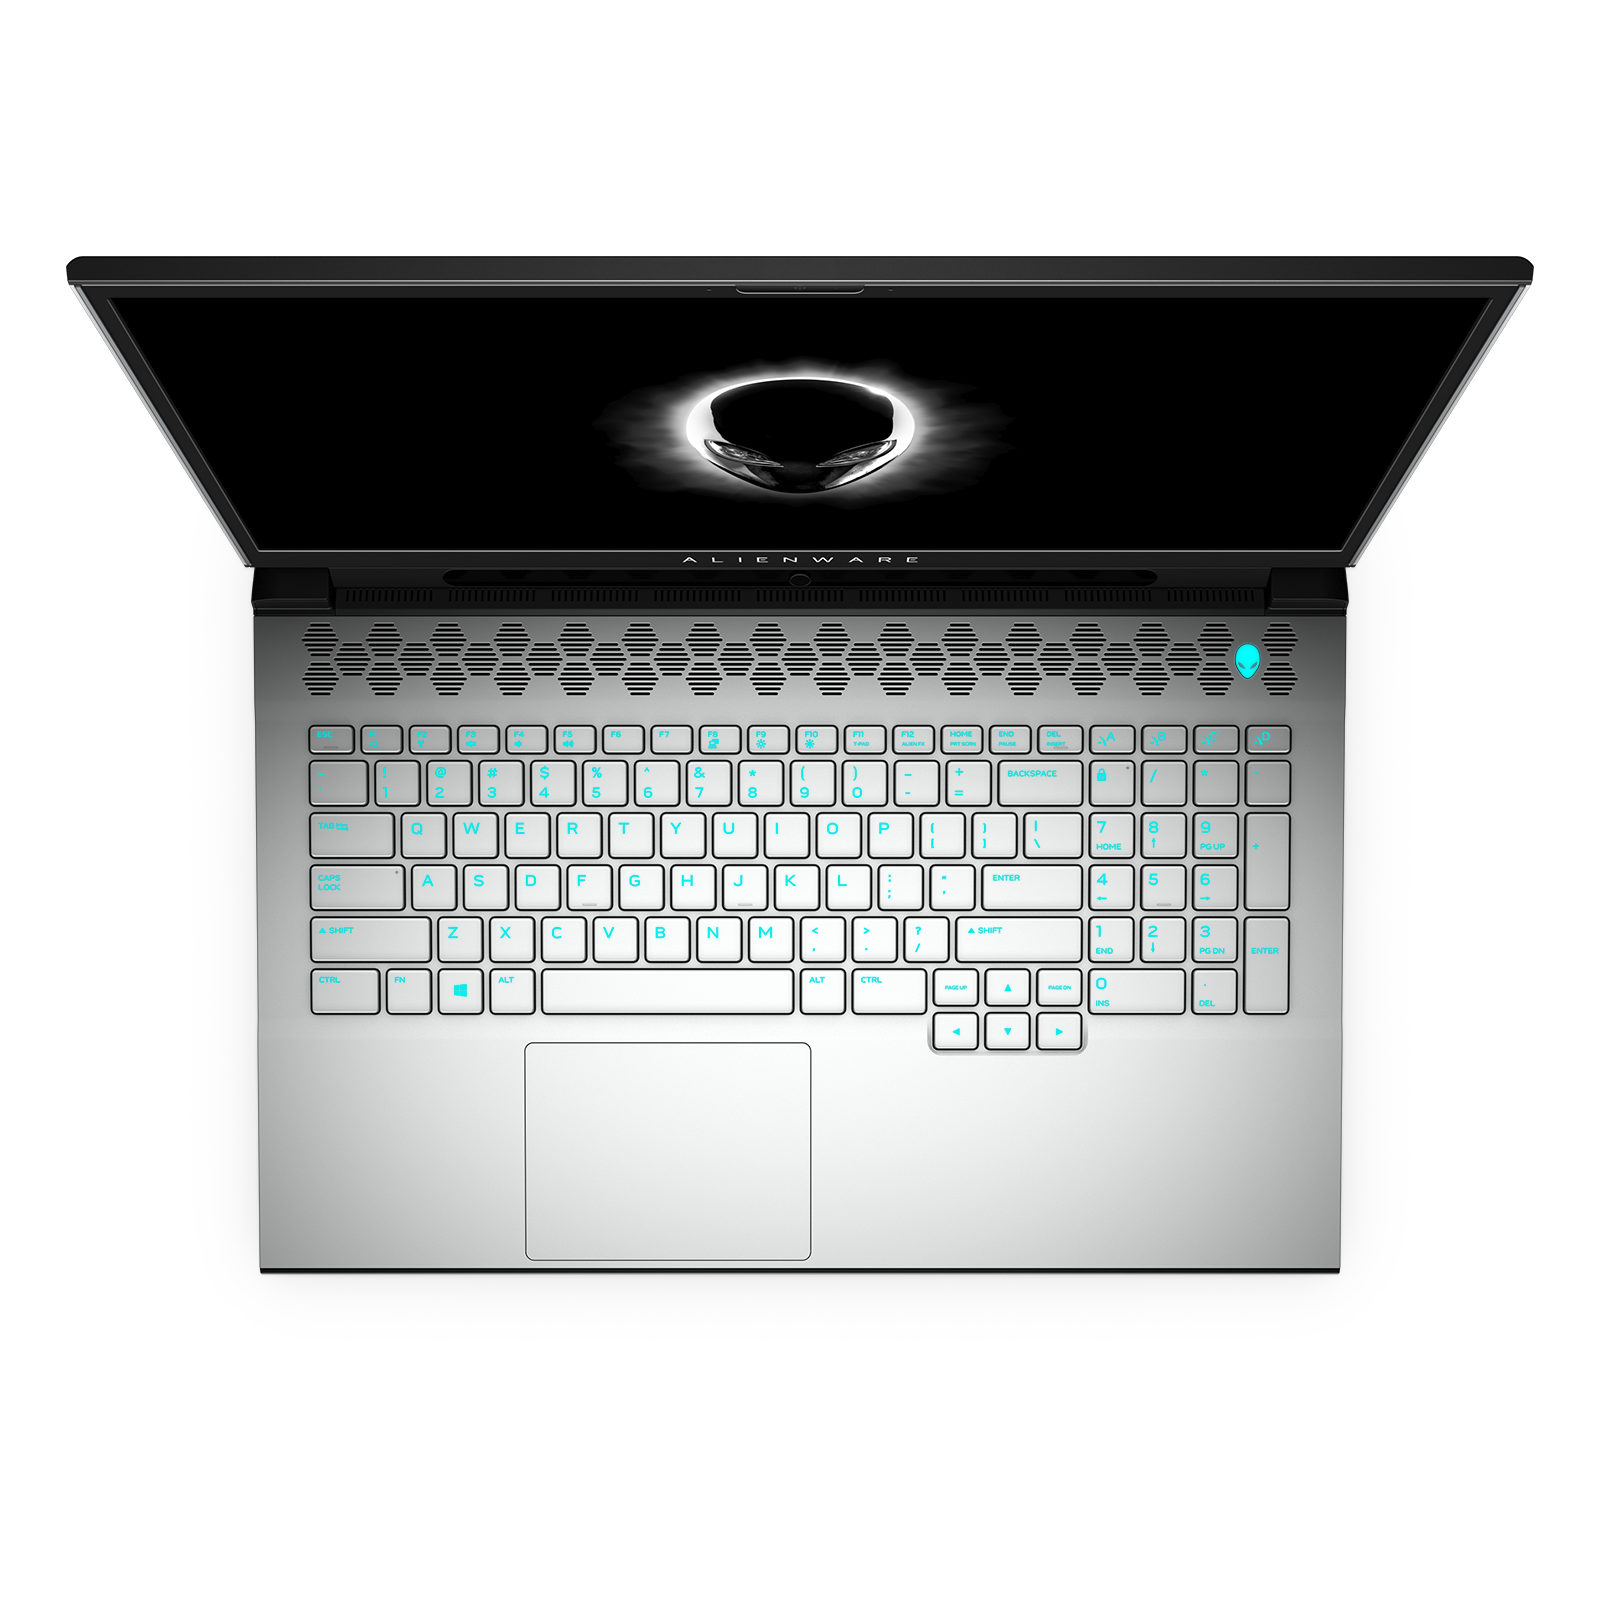 Dell Alienware m17 (Model R4) non-touch Tobii notebook computer, codename Viper MLK.